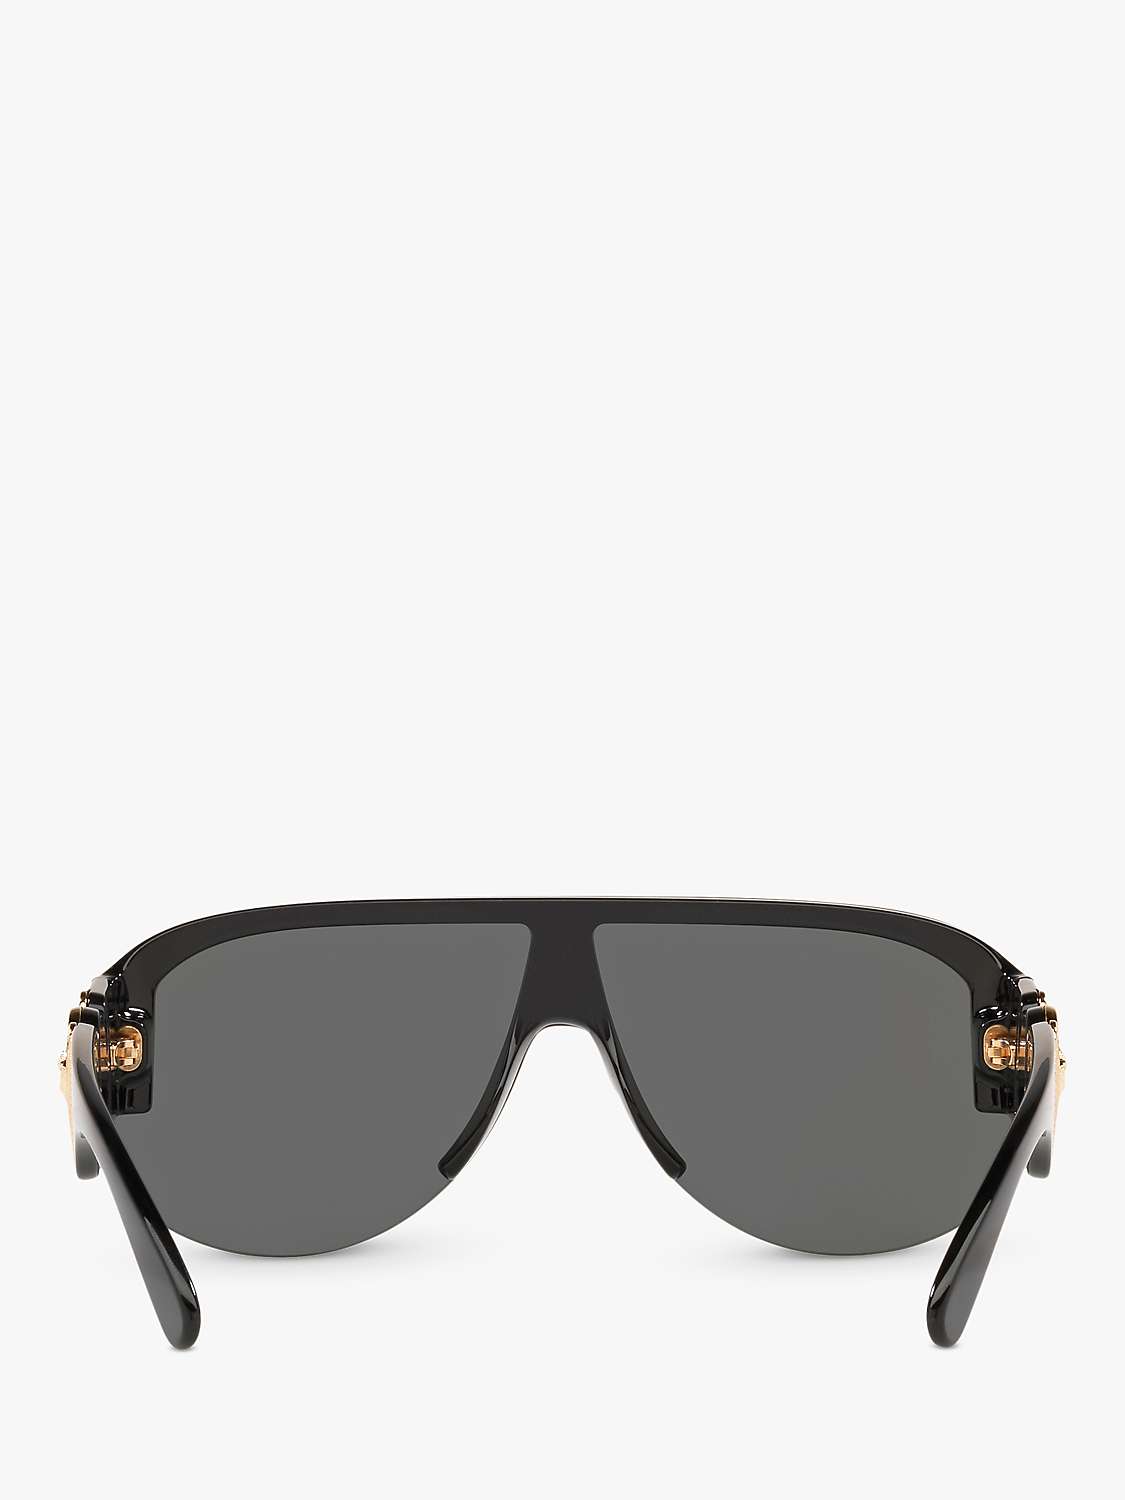 Versace VE4391 Women's Irregular Sunglasses, Black/Grey at John Lewis ...